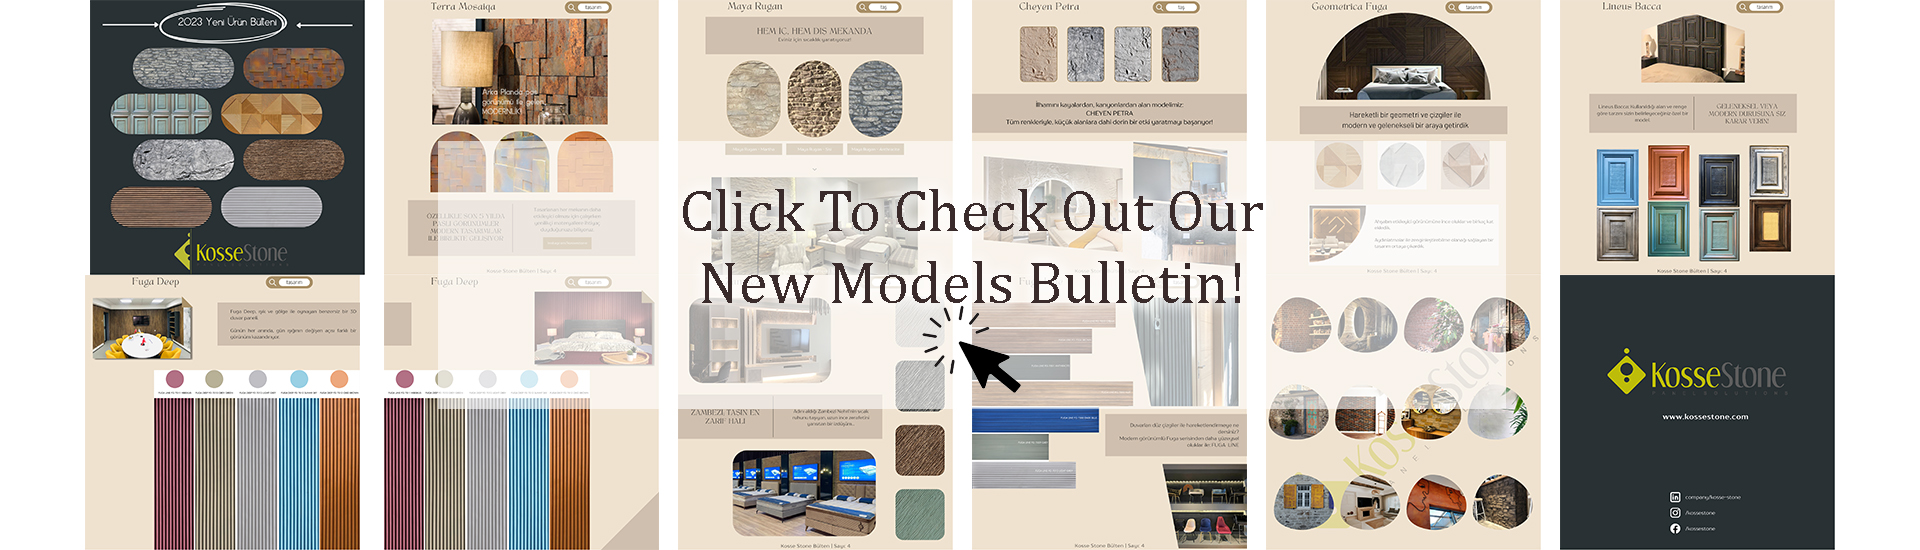 Kosse Stone Bulletin über neue Modelle